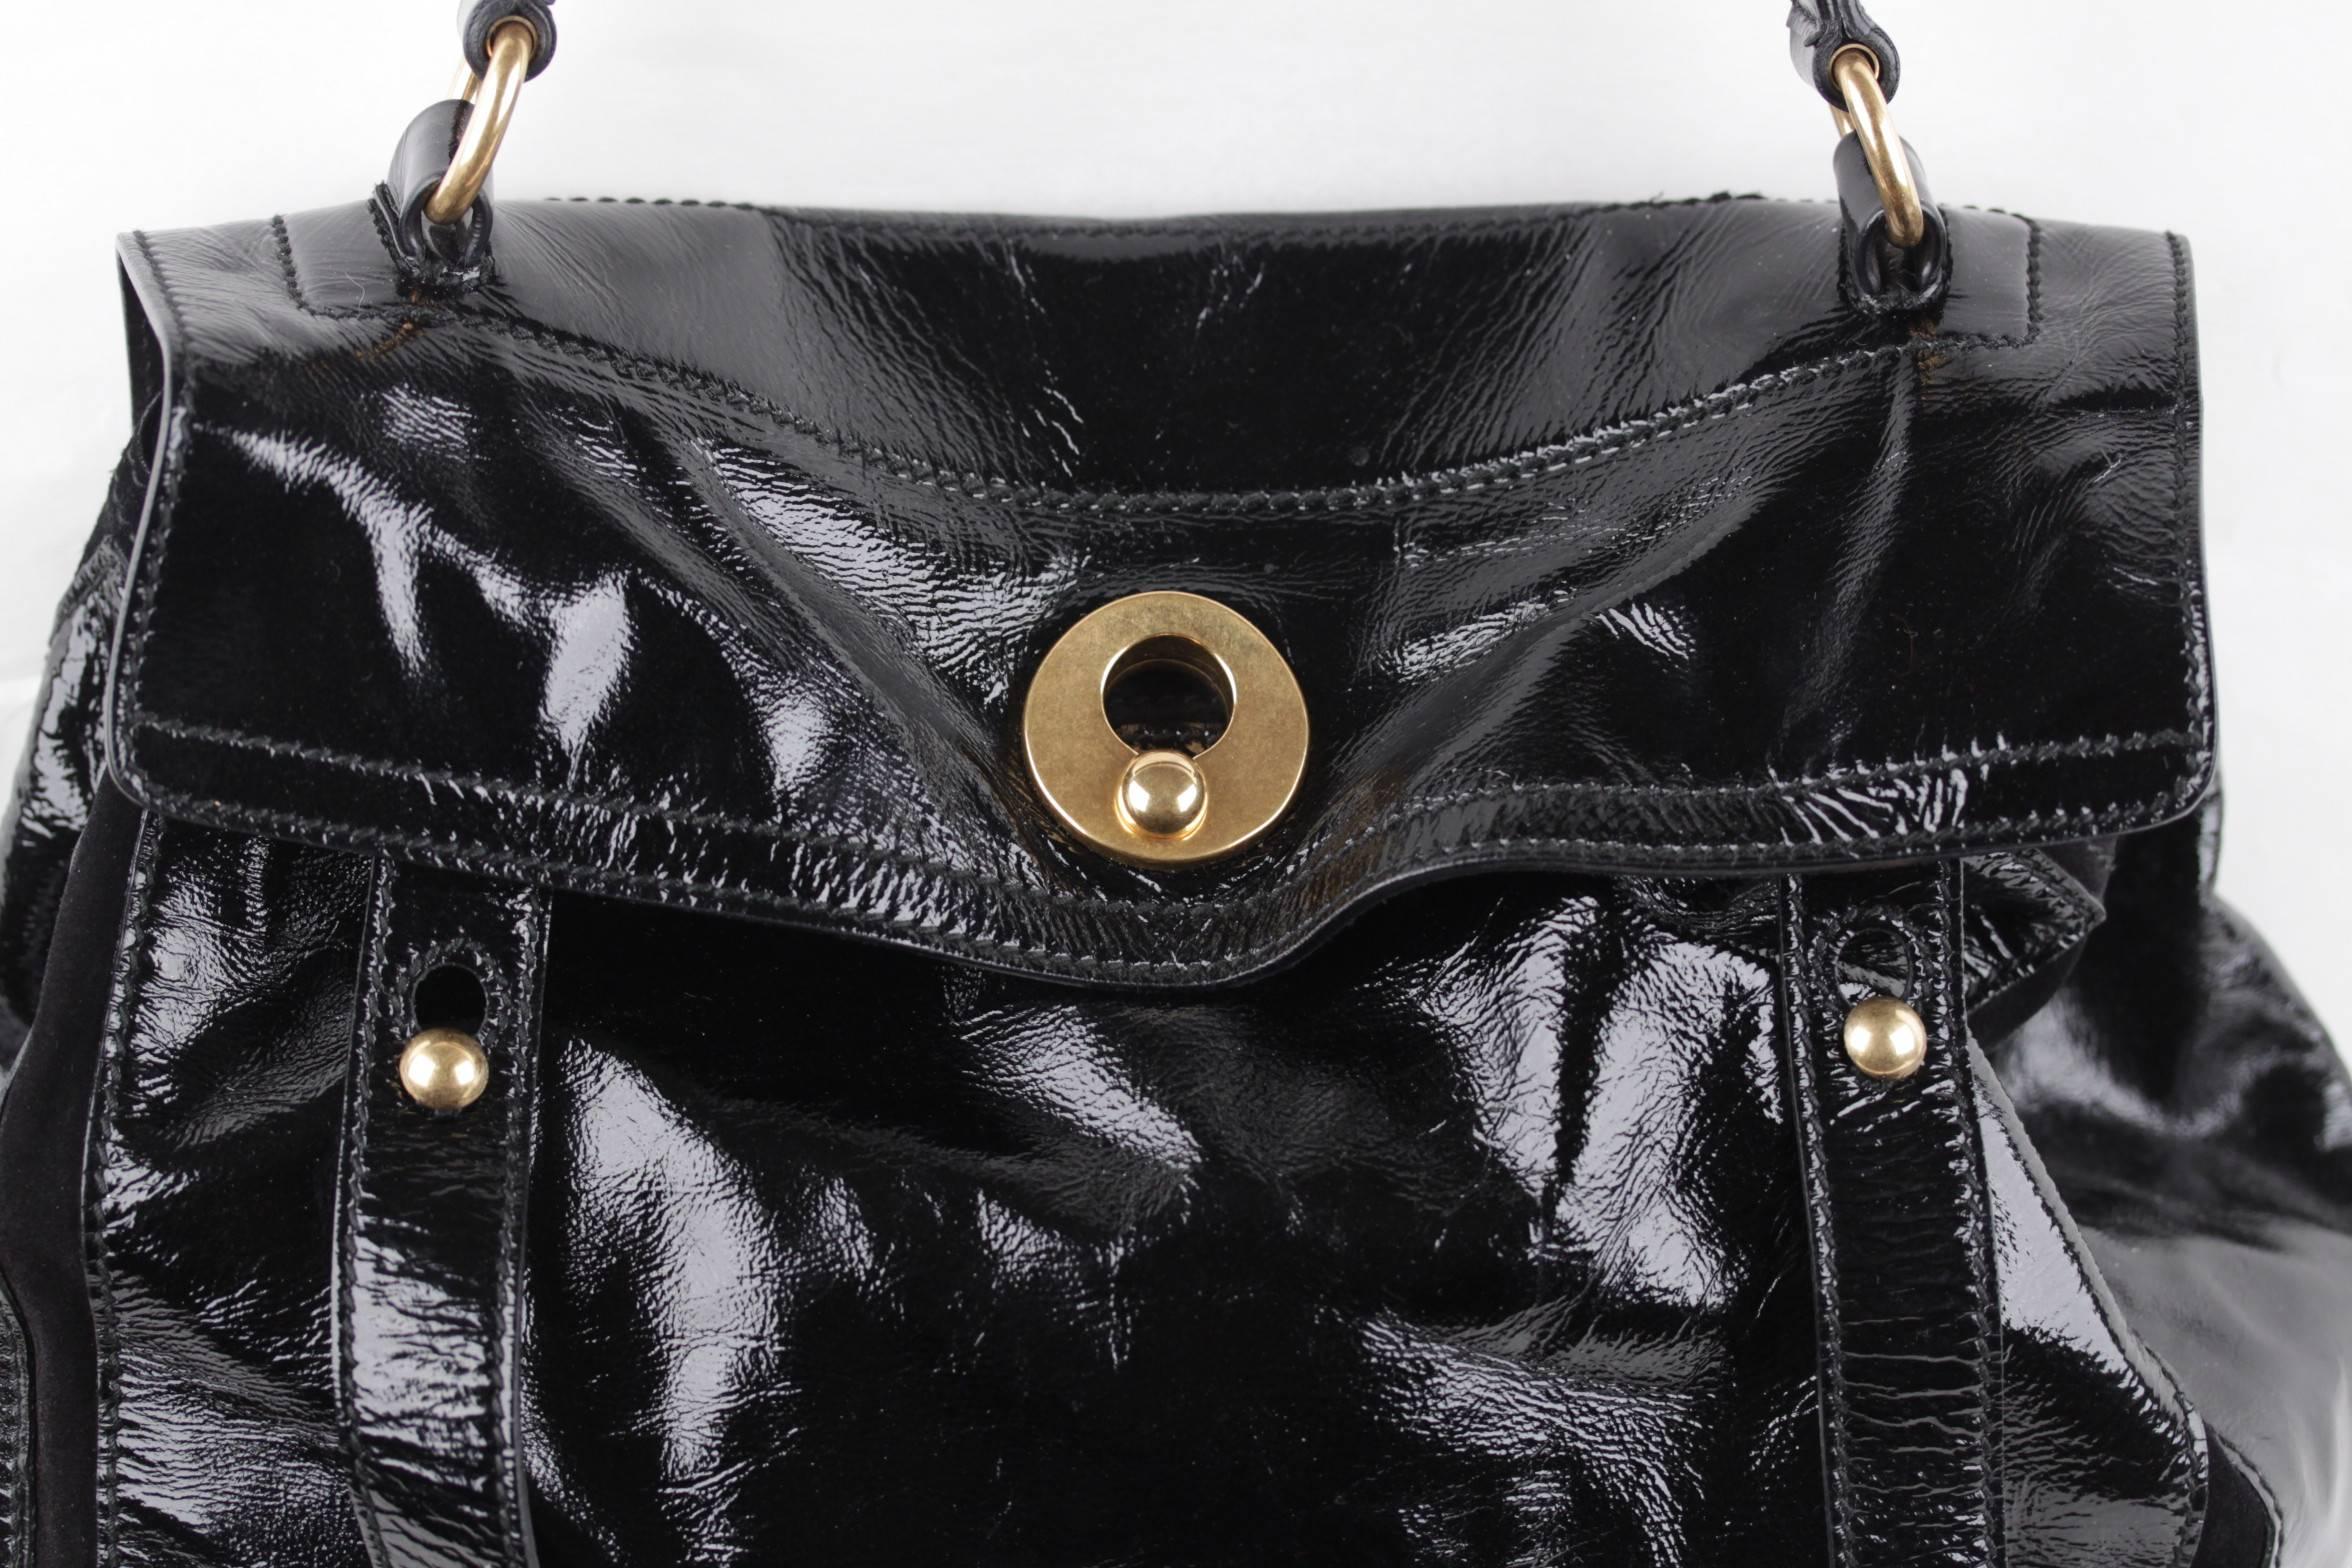 Women's YVES SAINT LAURENT Black Patent Leather MUSE TWO 2 Satchel TOTE Handbag